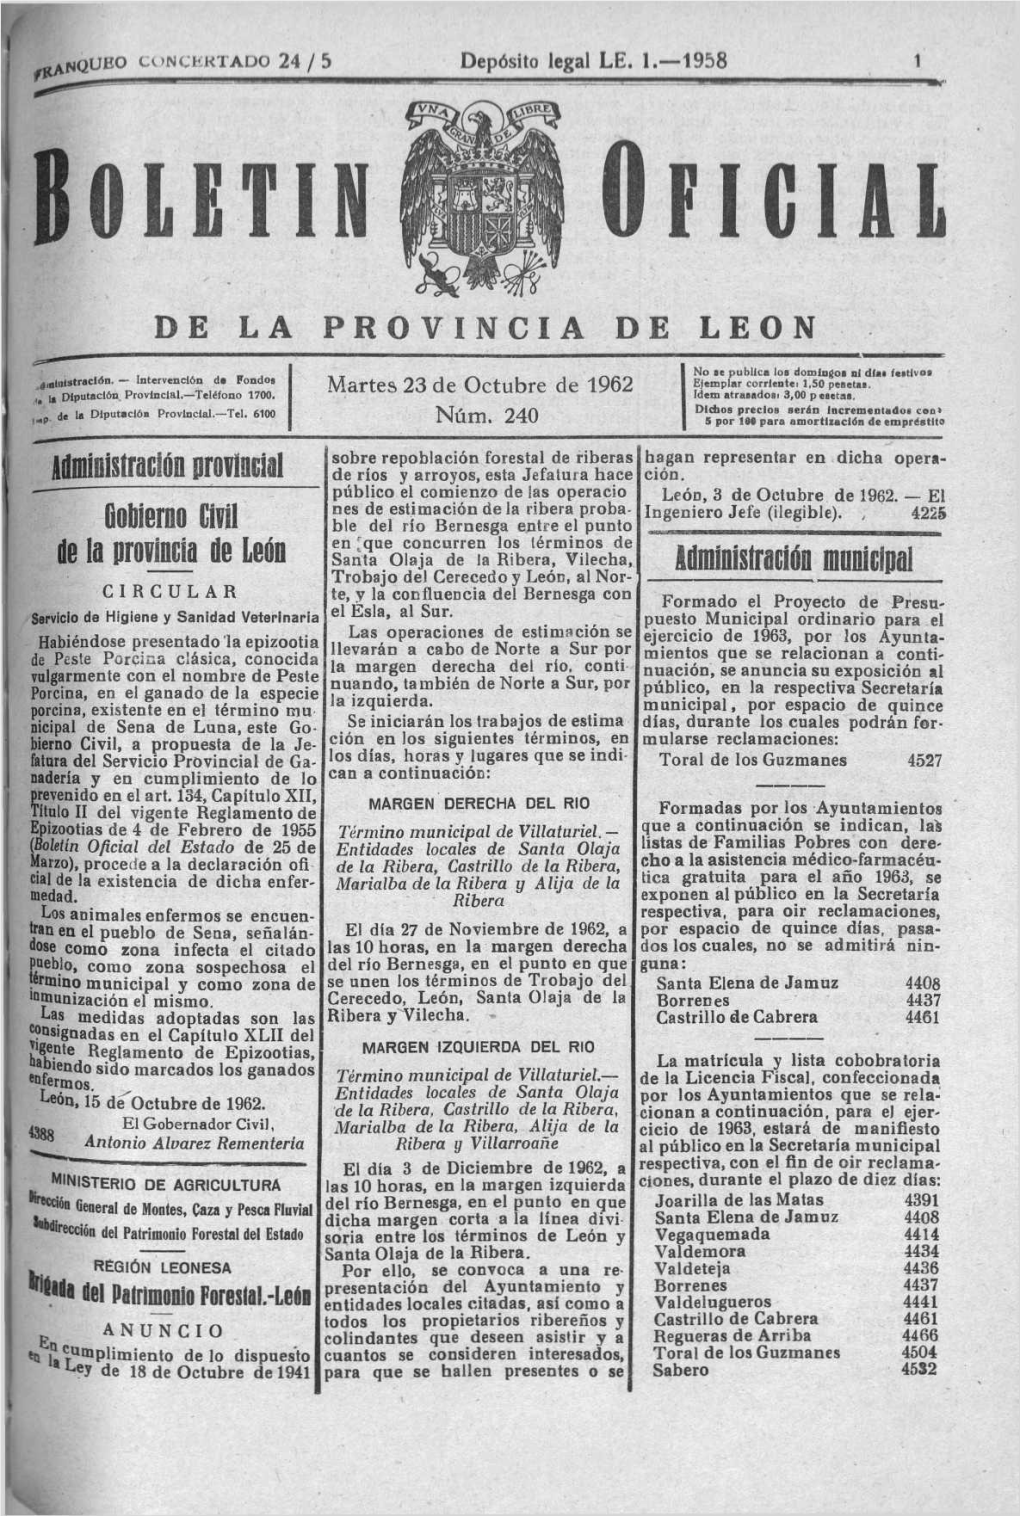 Tdédistram Provincial Oobíemo Civil De La Provincia De León Mmlnislratlún Mnnlclpal